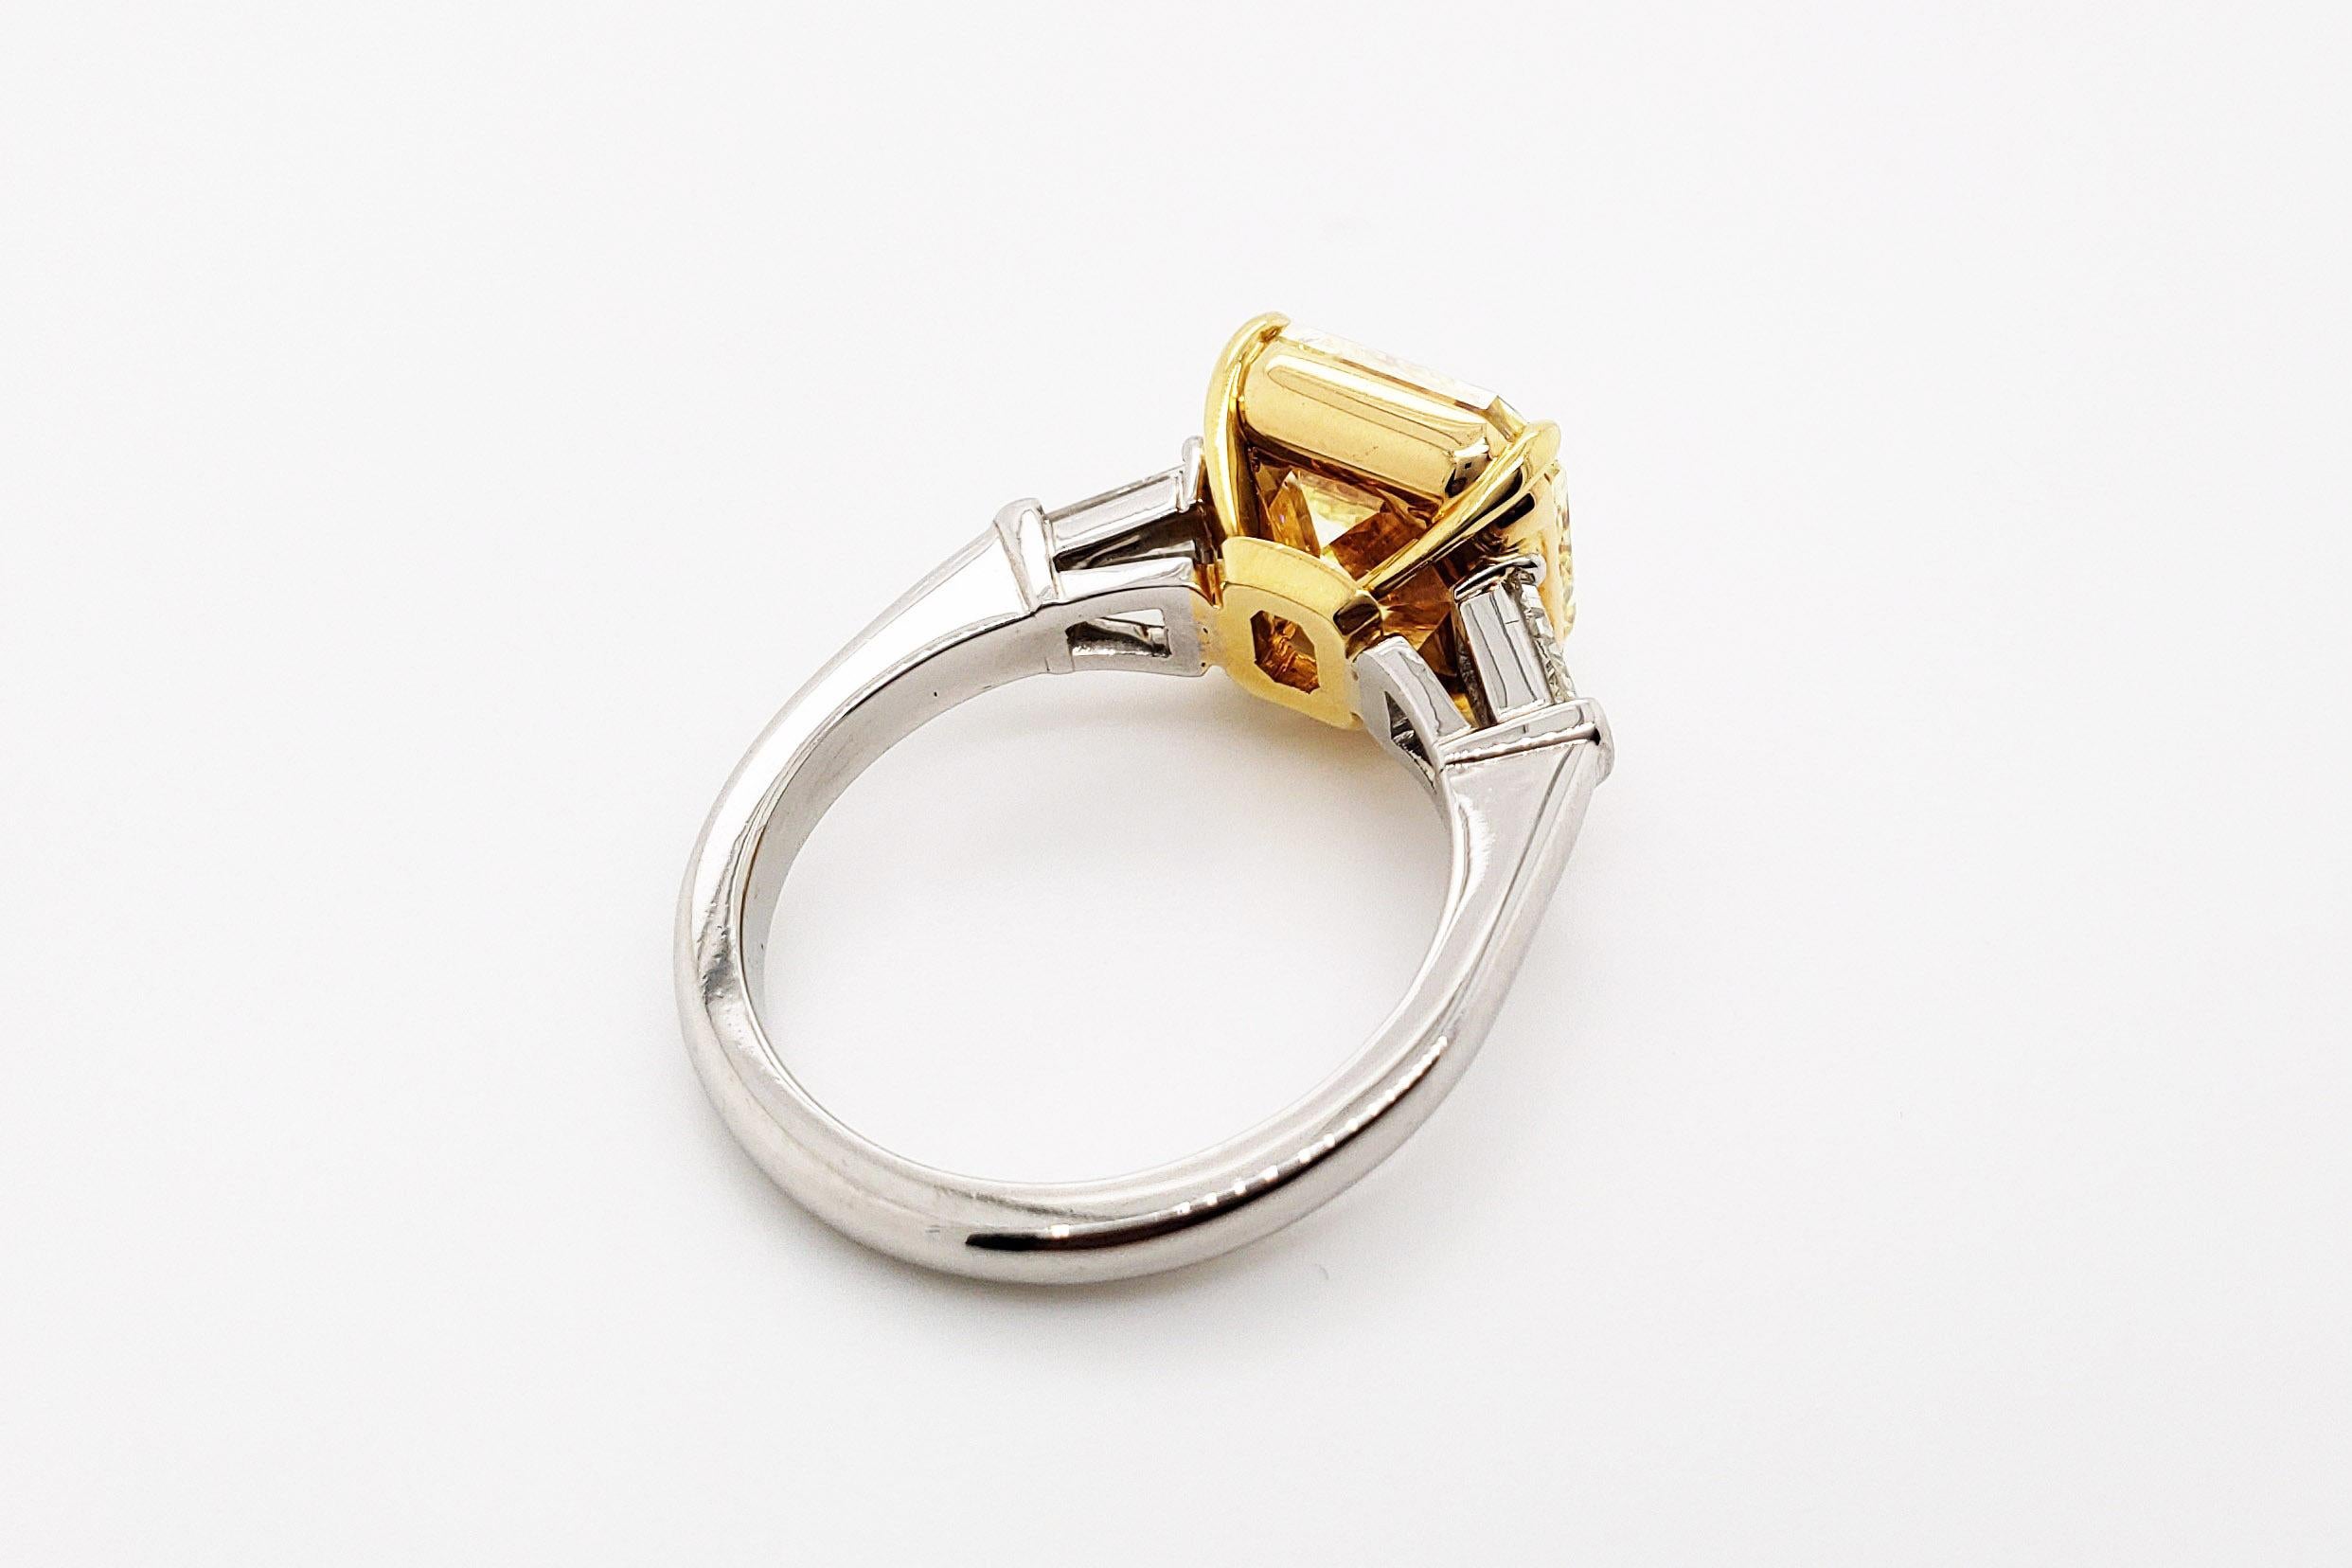 Contemporary Scarselli 6 Carat Fancy Intense Yellow Radiant Diamond Ring in Platinum VS1 GIA